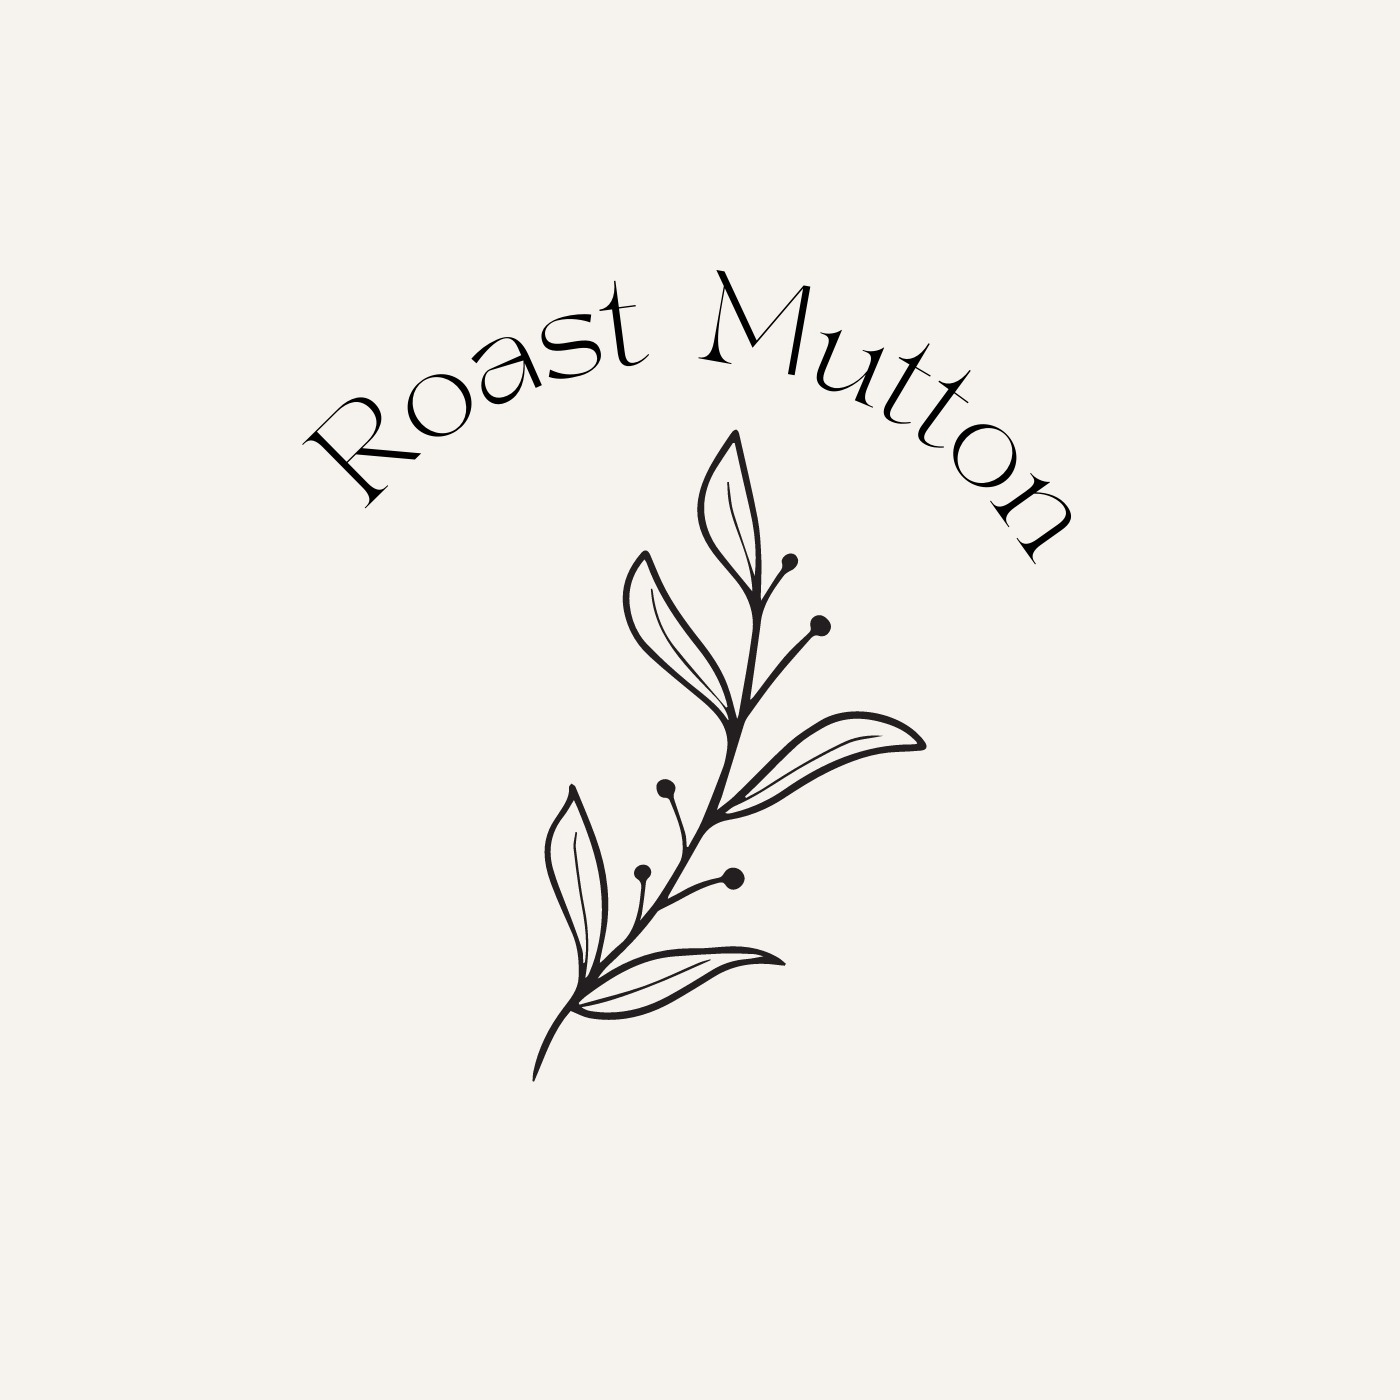 Episode 30: Roast Mutton with Anna María